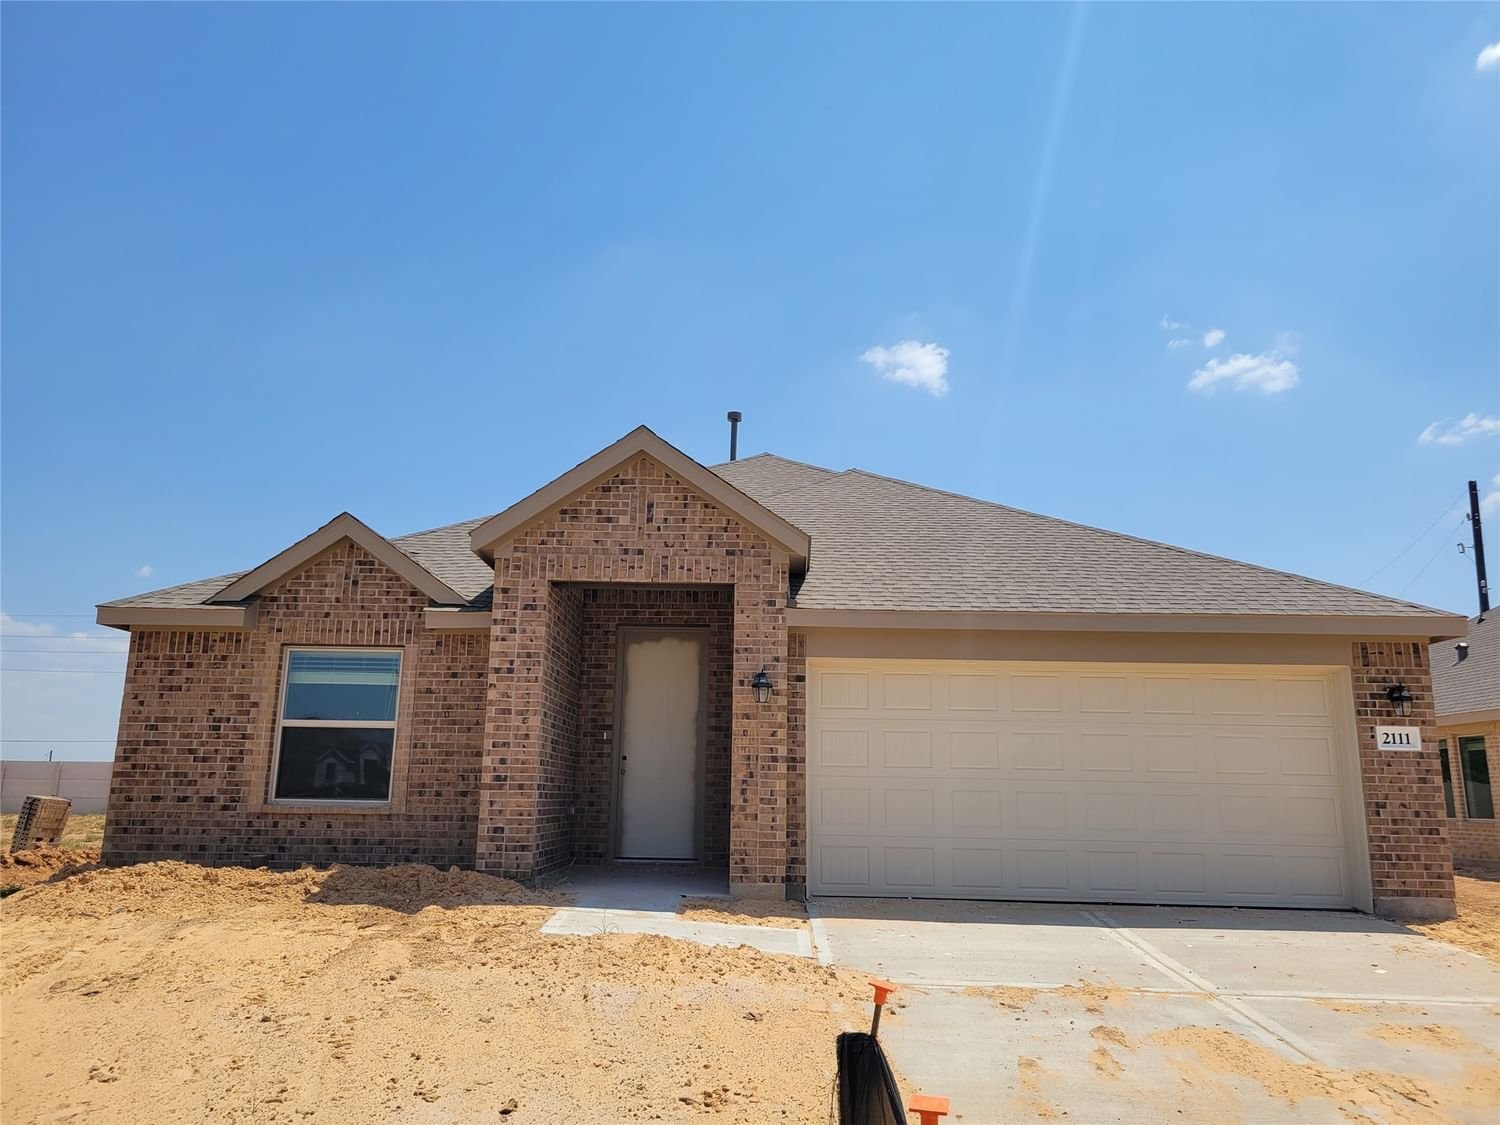 Real estate property located at 2111 Heather Ridge, Fort Bend, Miller's Pond, Rosenberg, TX, US